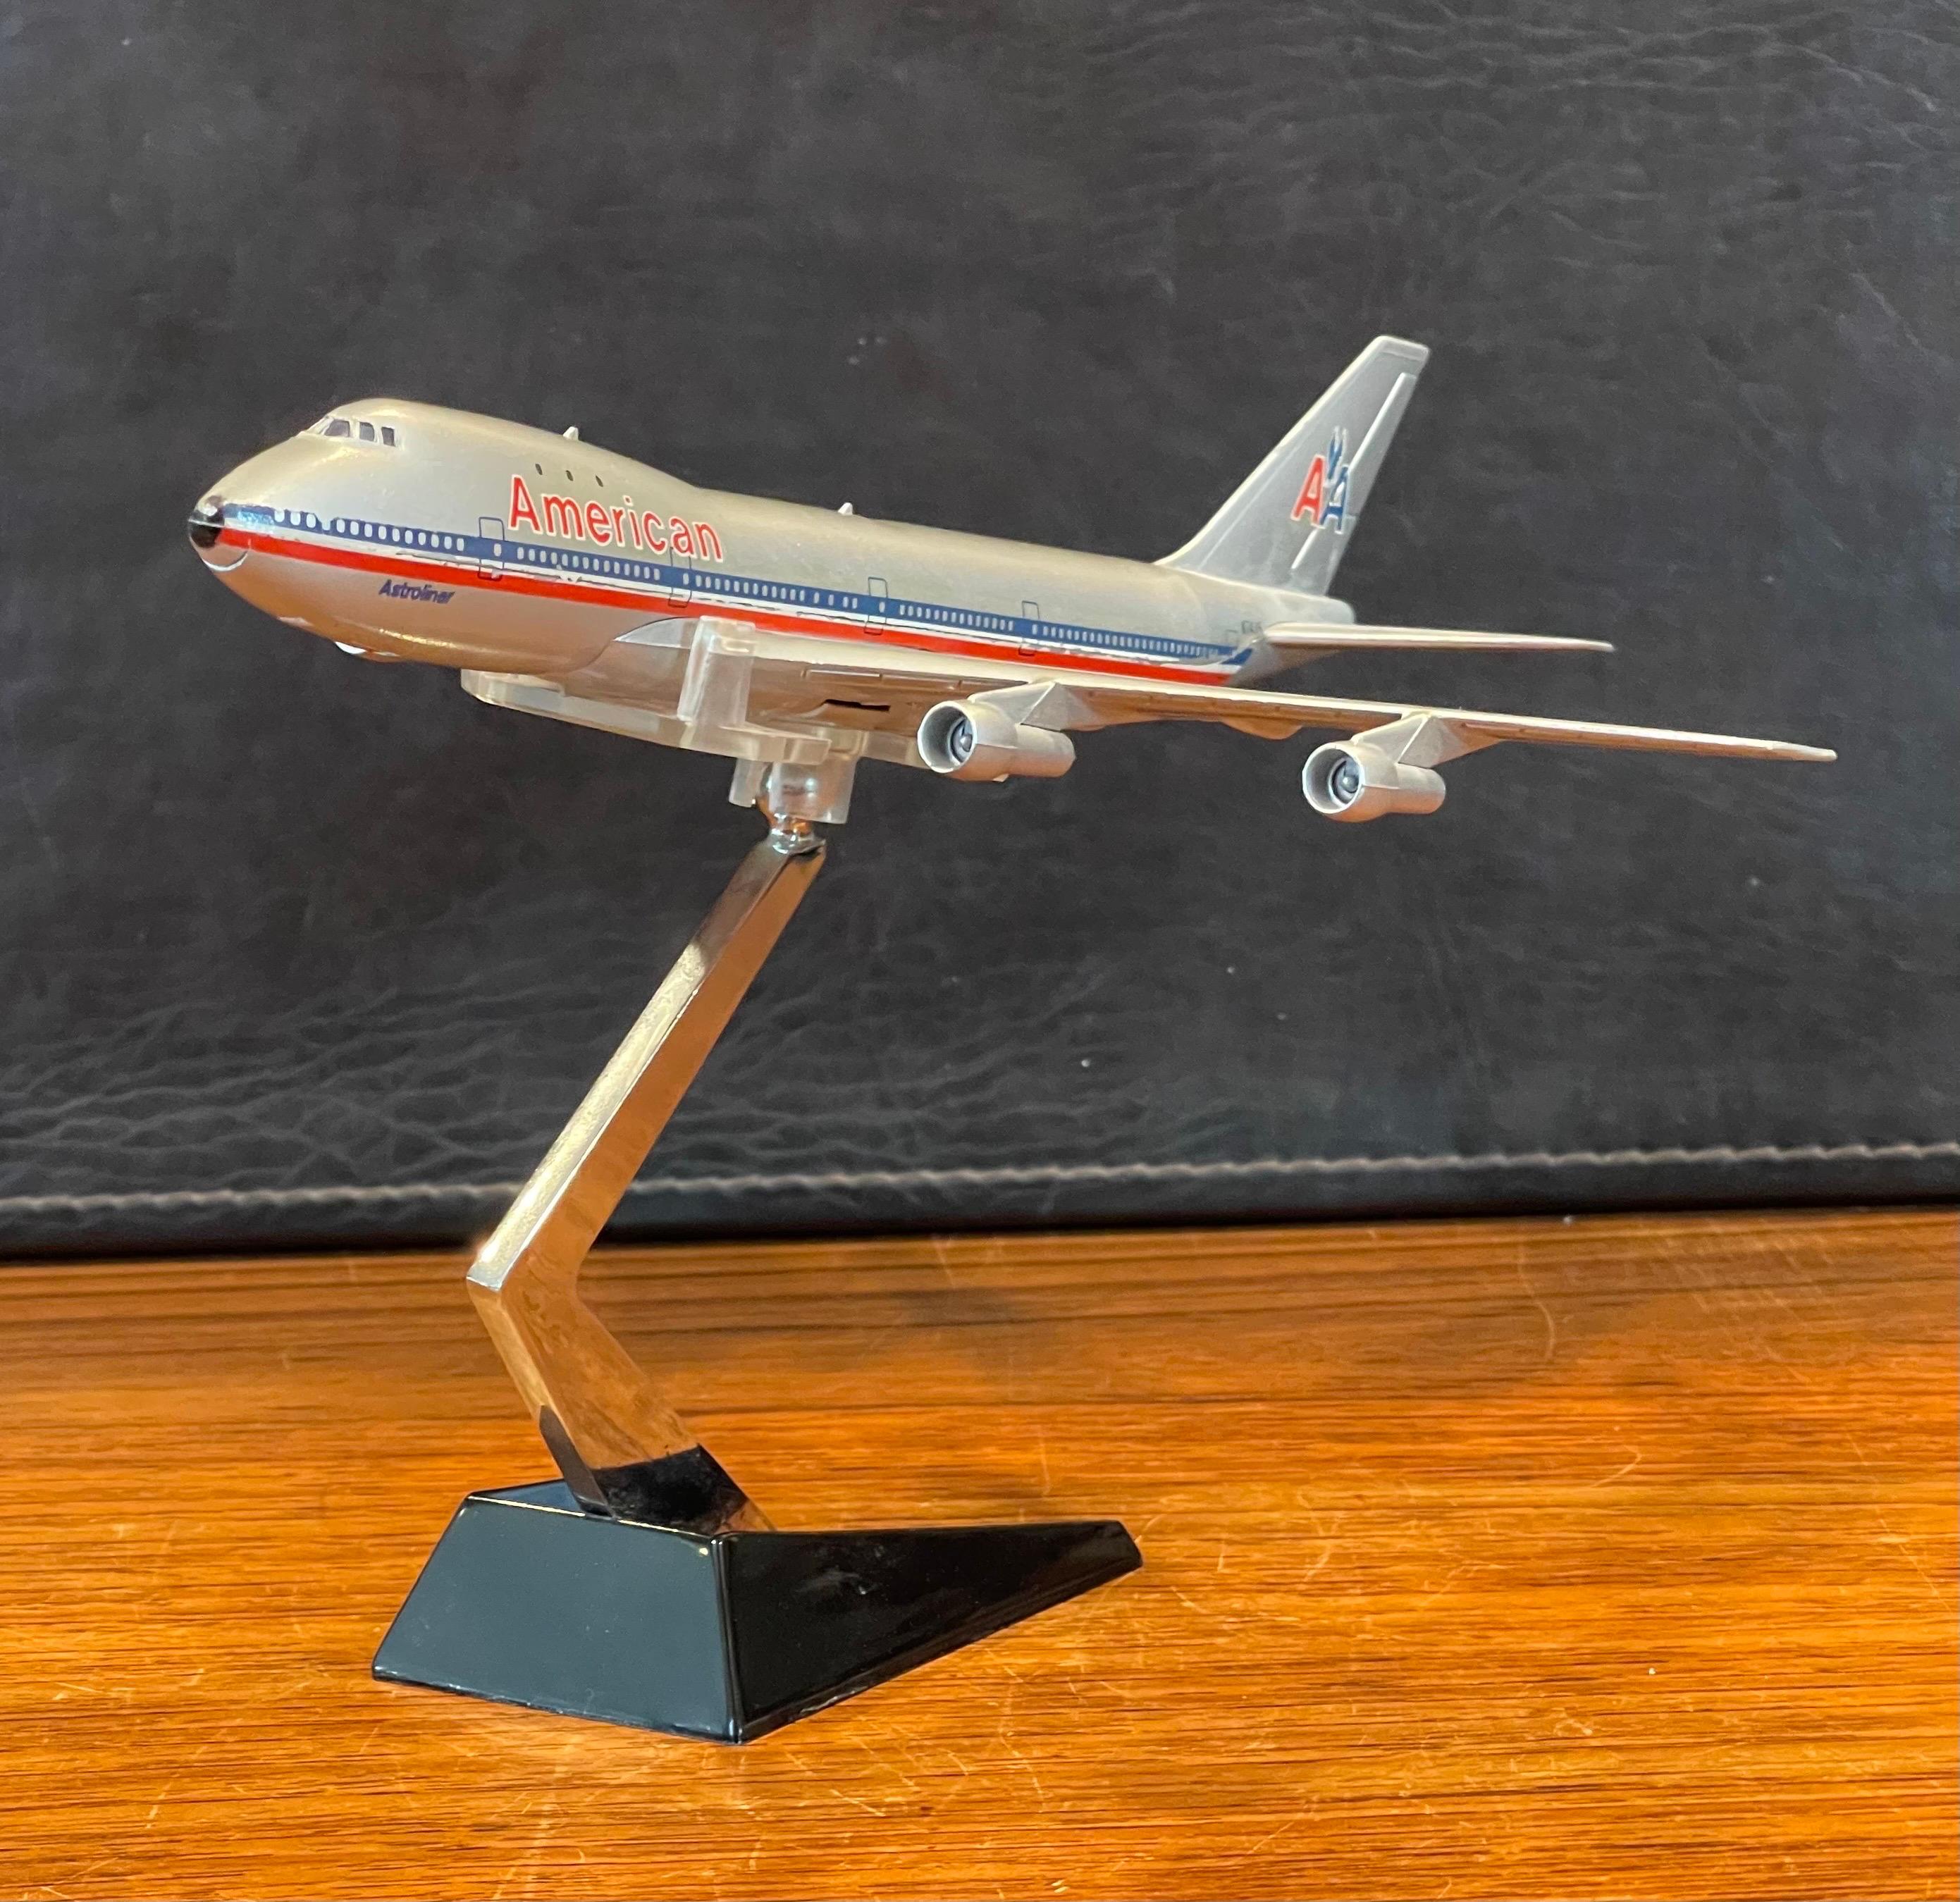 American Airlines Boeing 747 Jumbo Jetliner / Airplane Contractor Desk Model For Sale 1